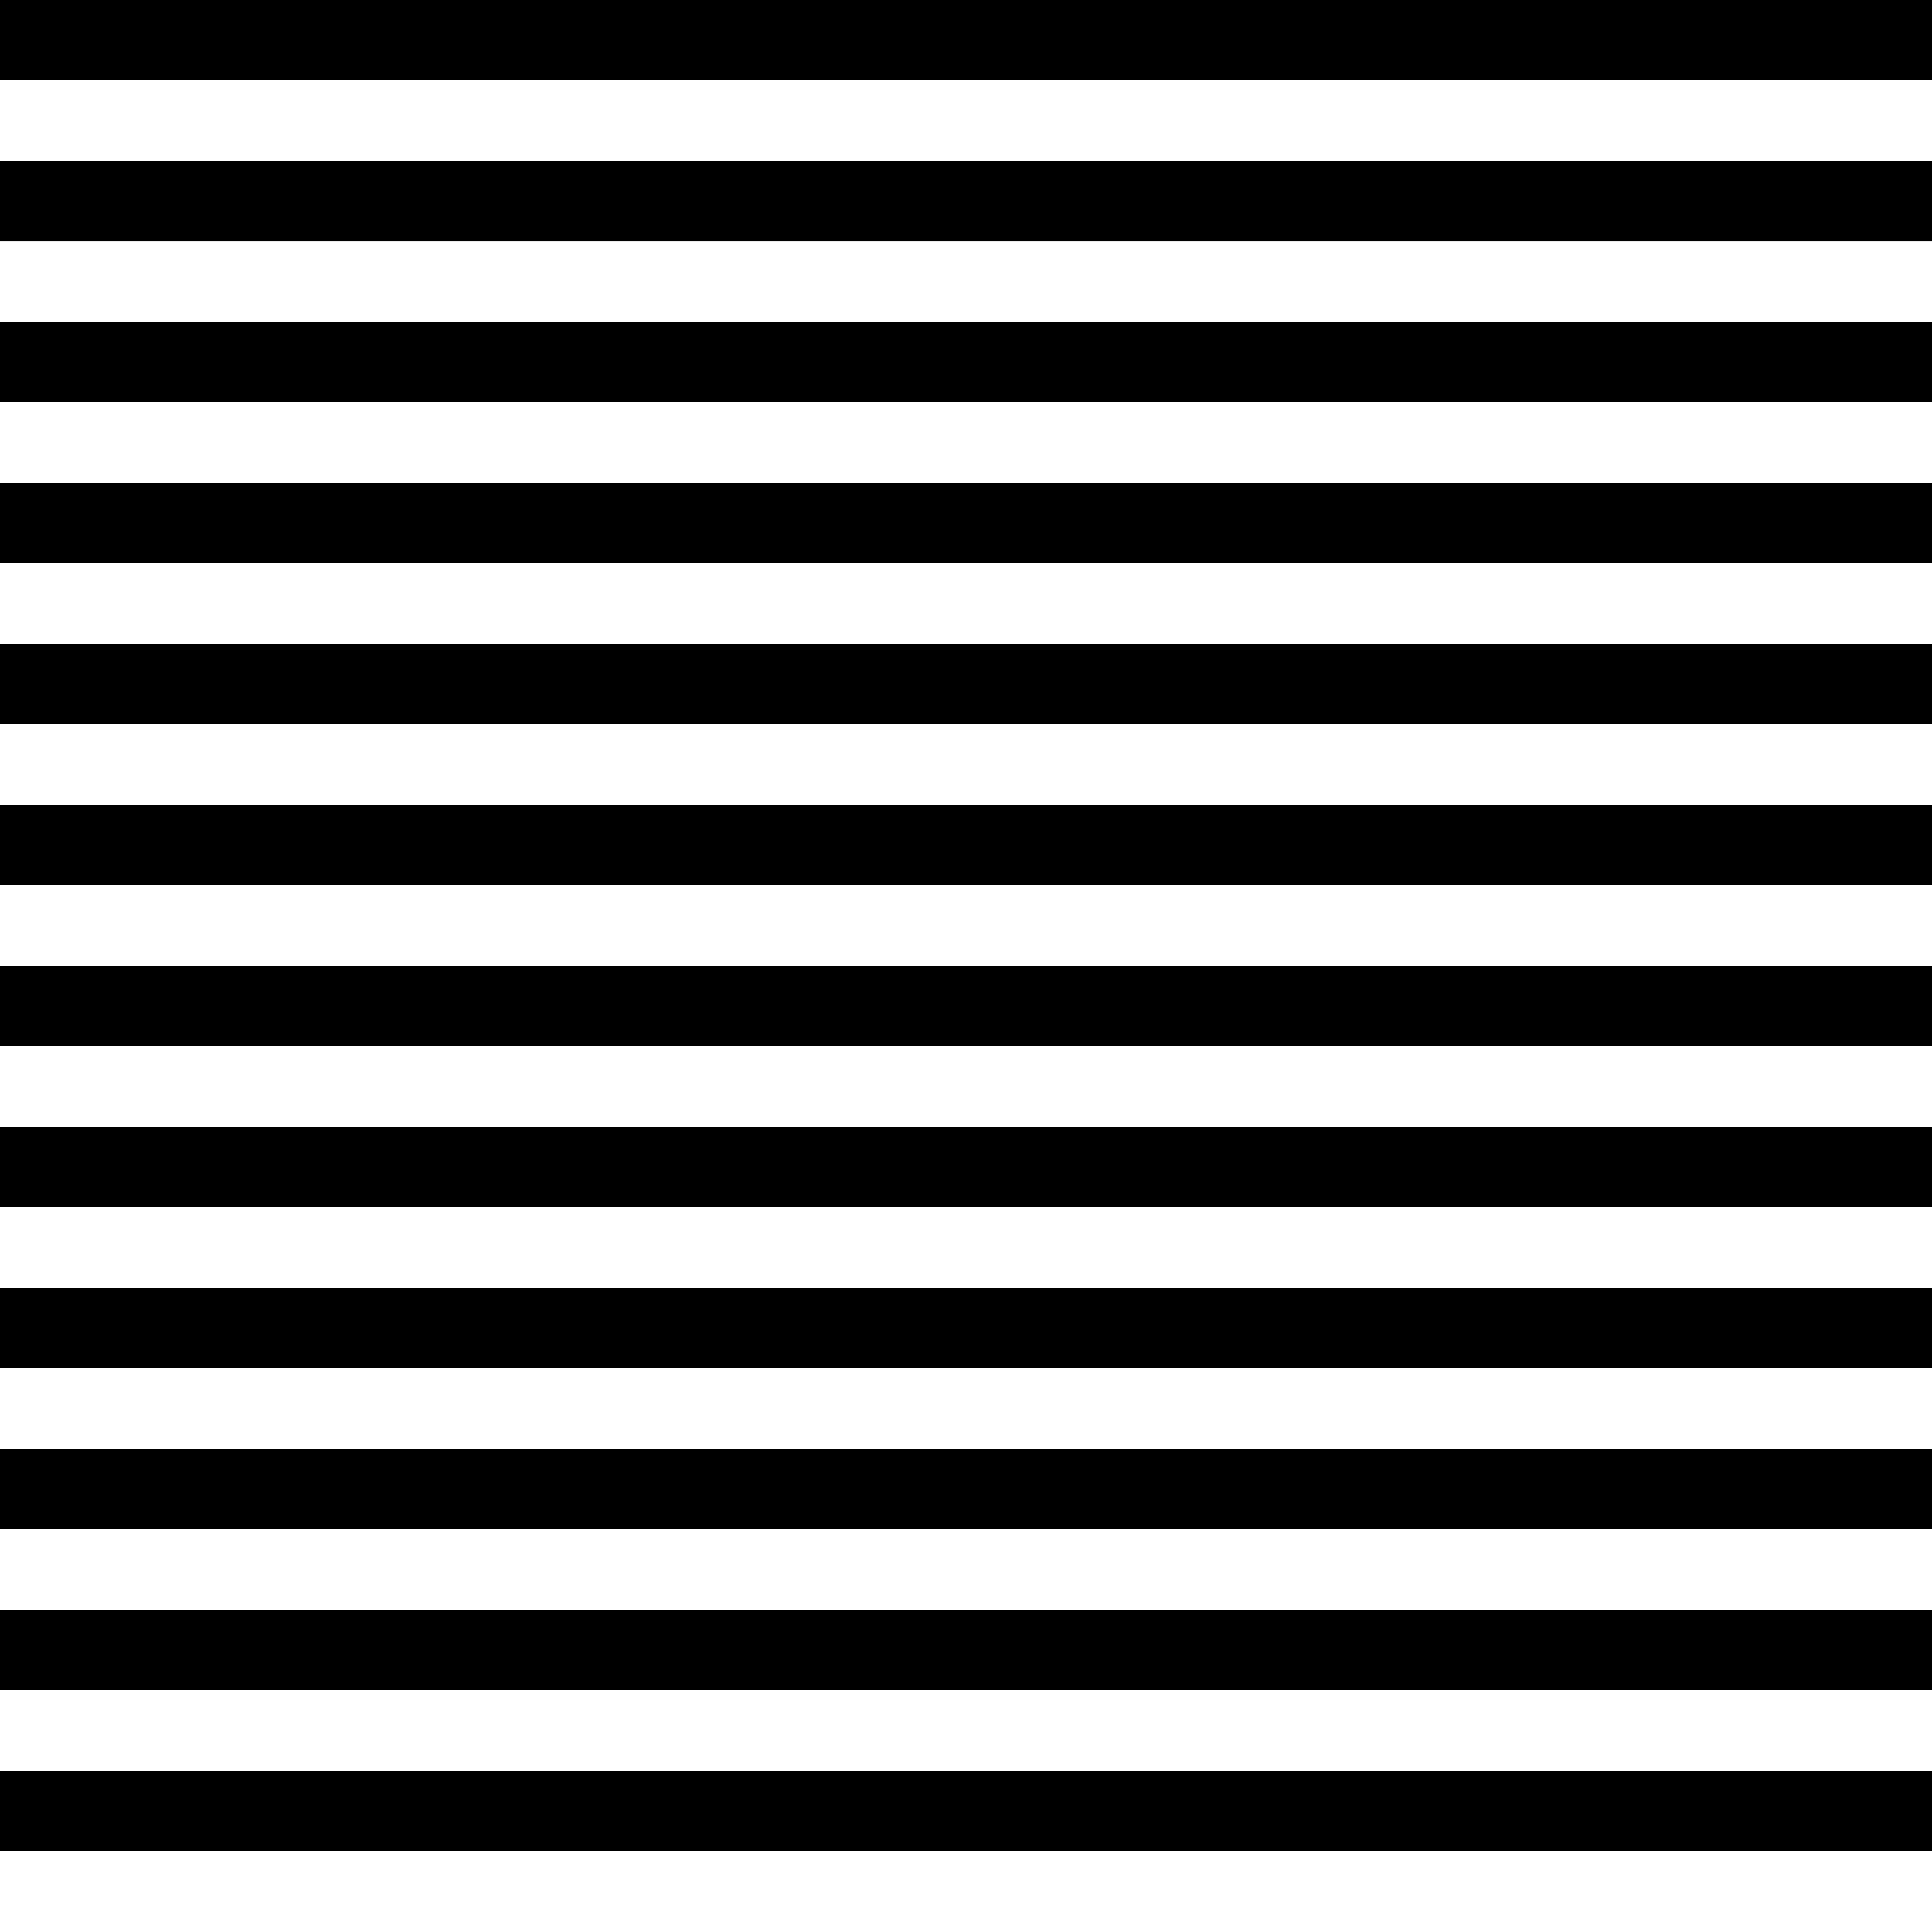 Black and White Stripes Wallpaper - WallpaperSafari